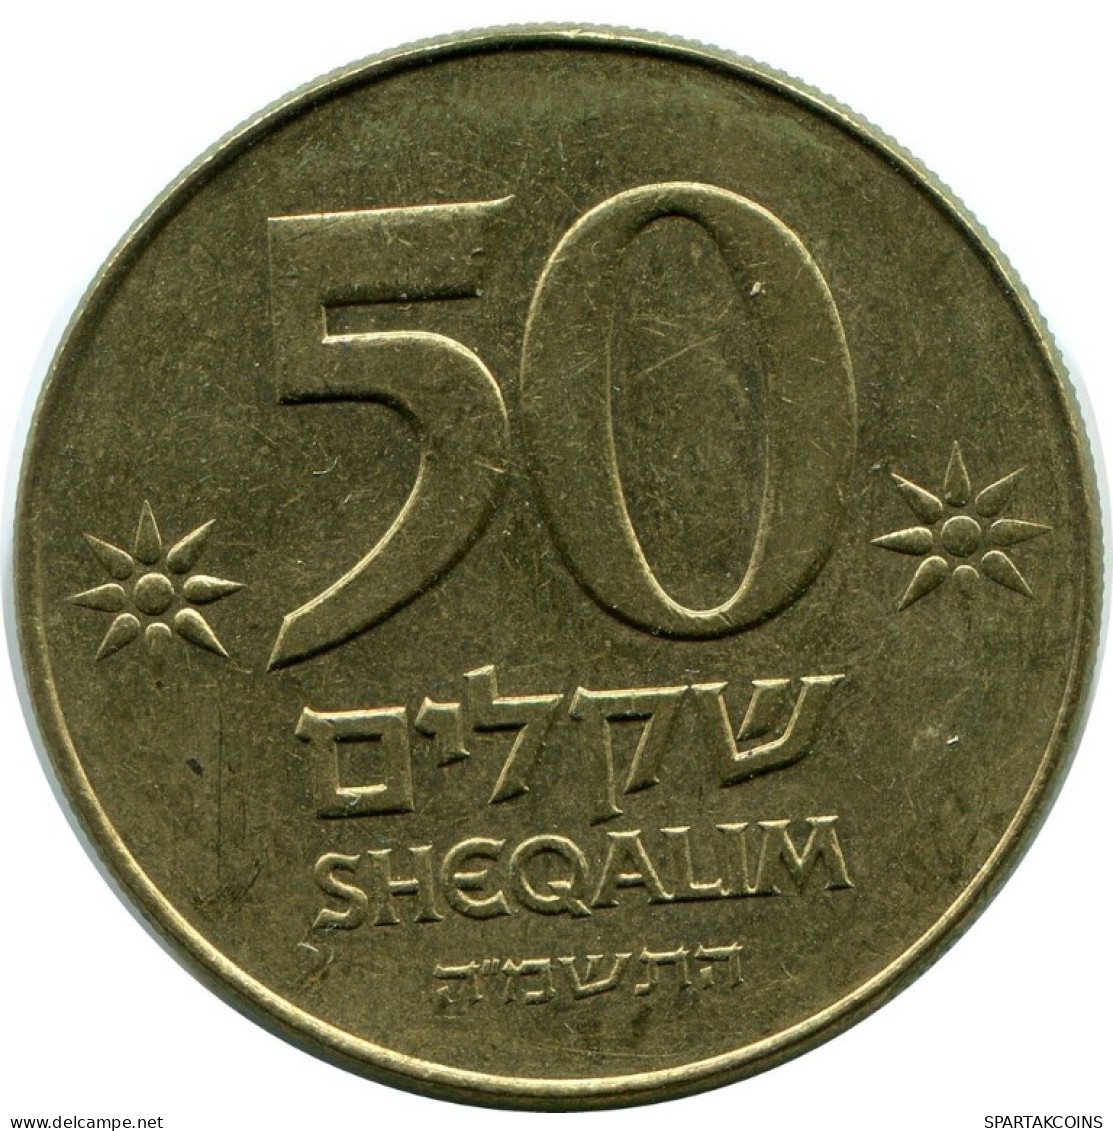 50 SHEQALIM 1984 ISRAEL Coin #AH764.U.A - Israel